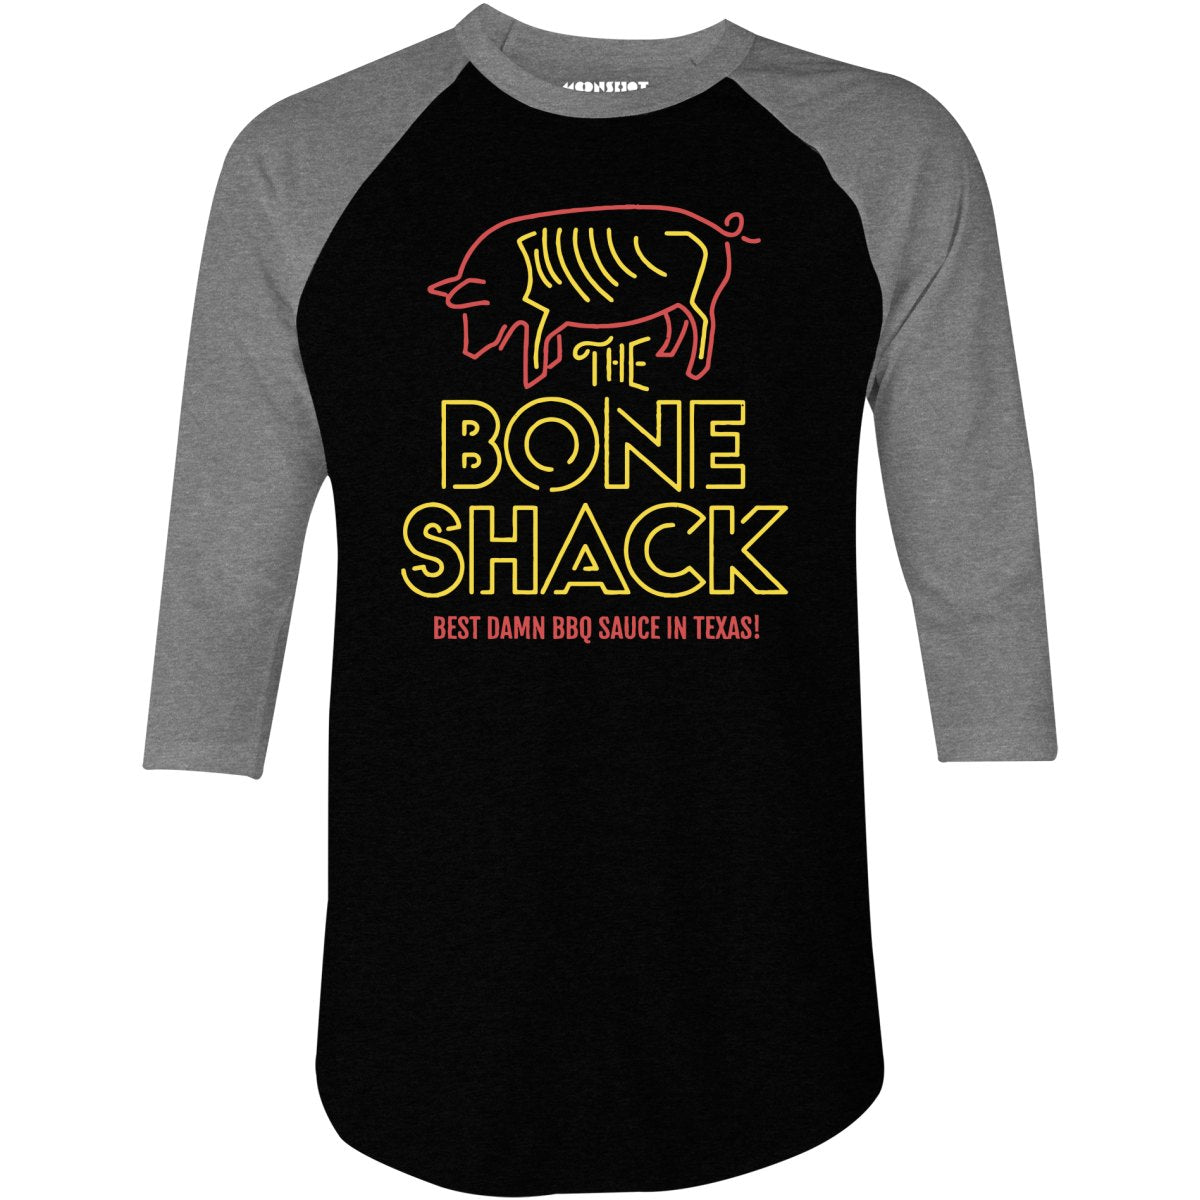 The Bone Shack - Planet Terror - 3/4 Sleeve Raglan T-Shirt